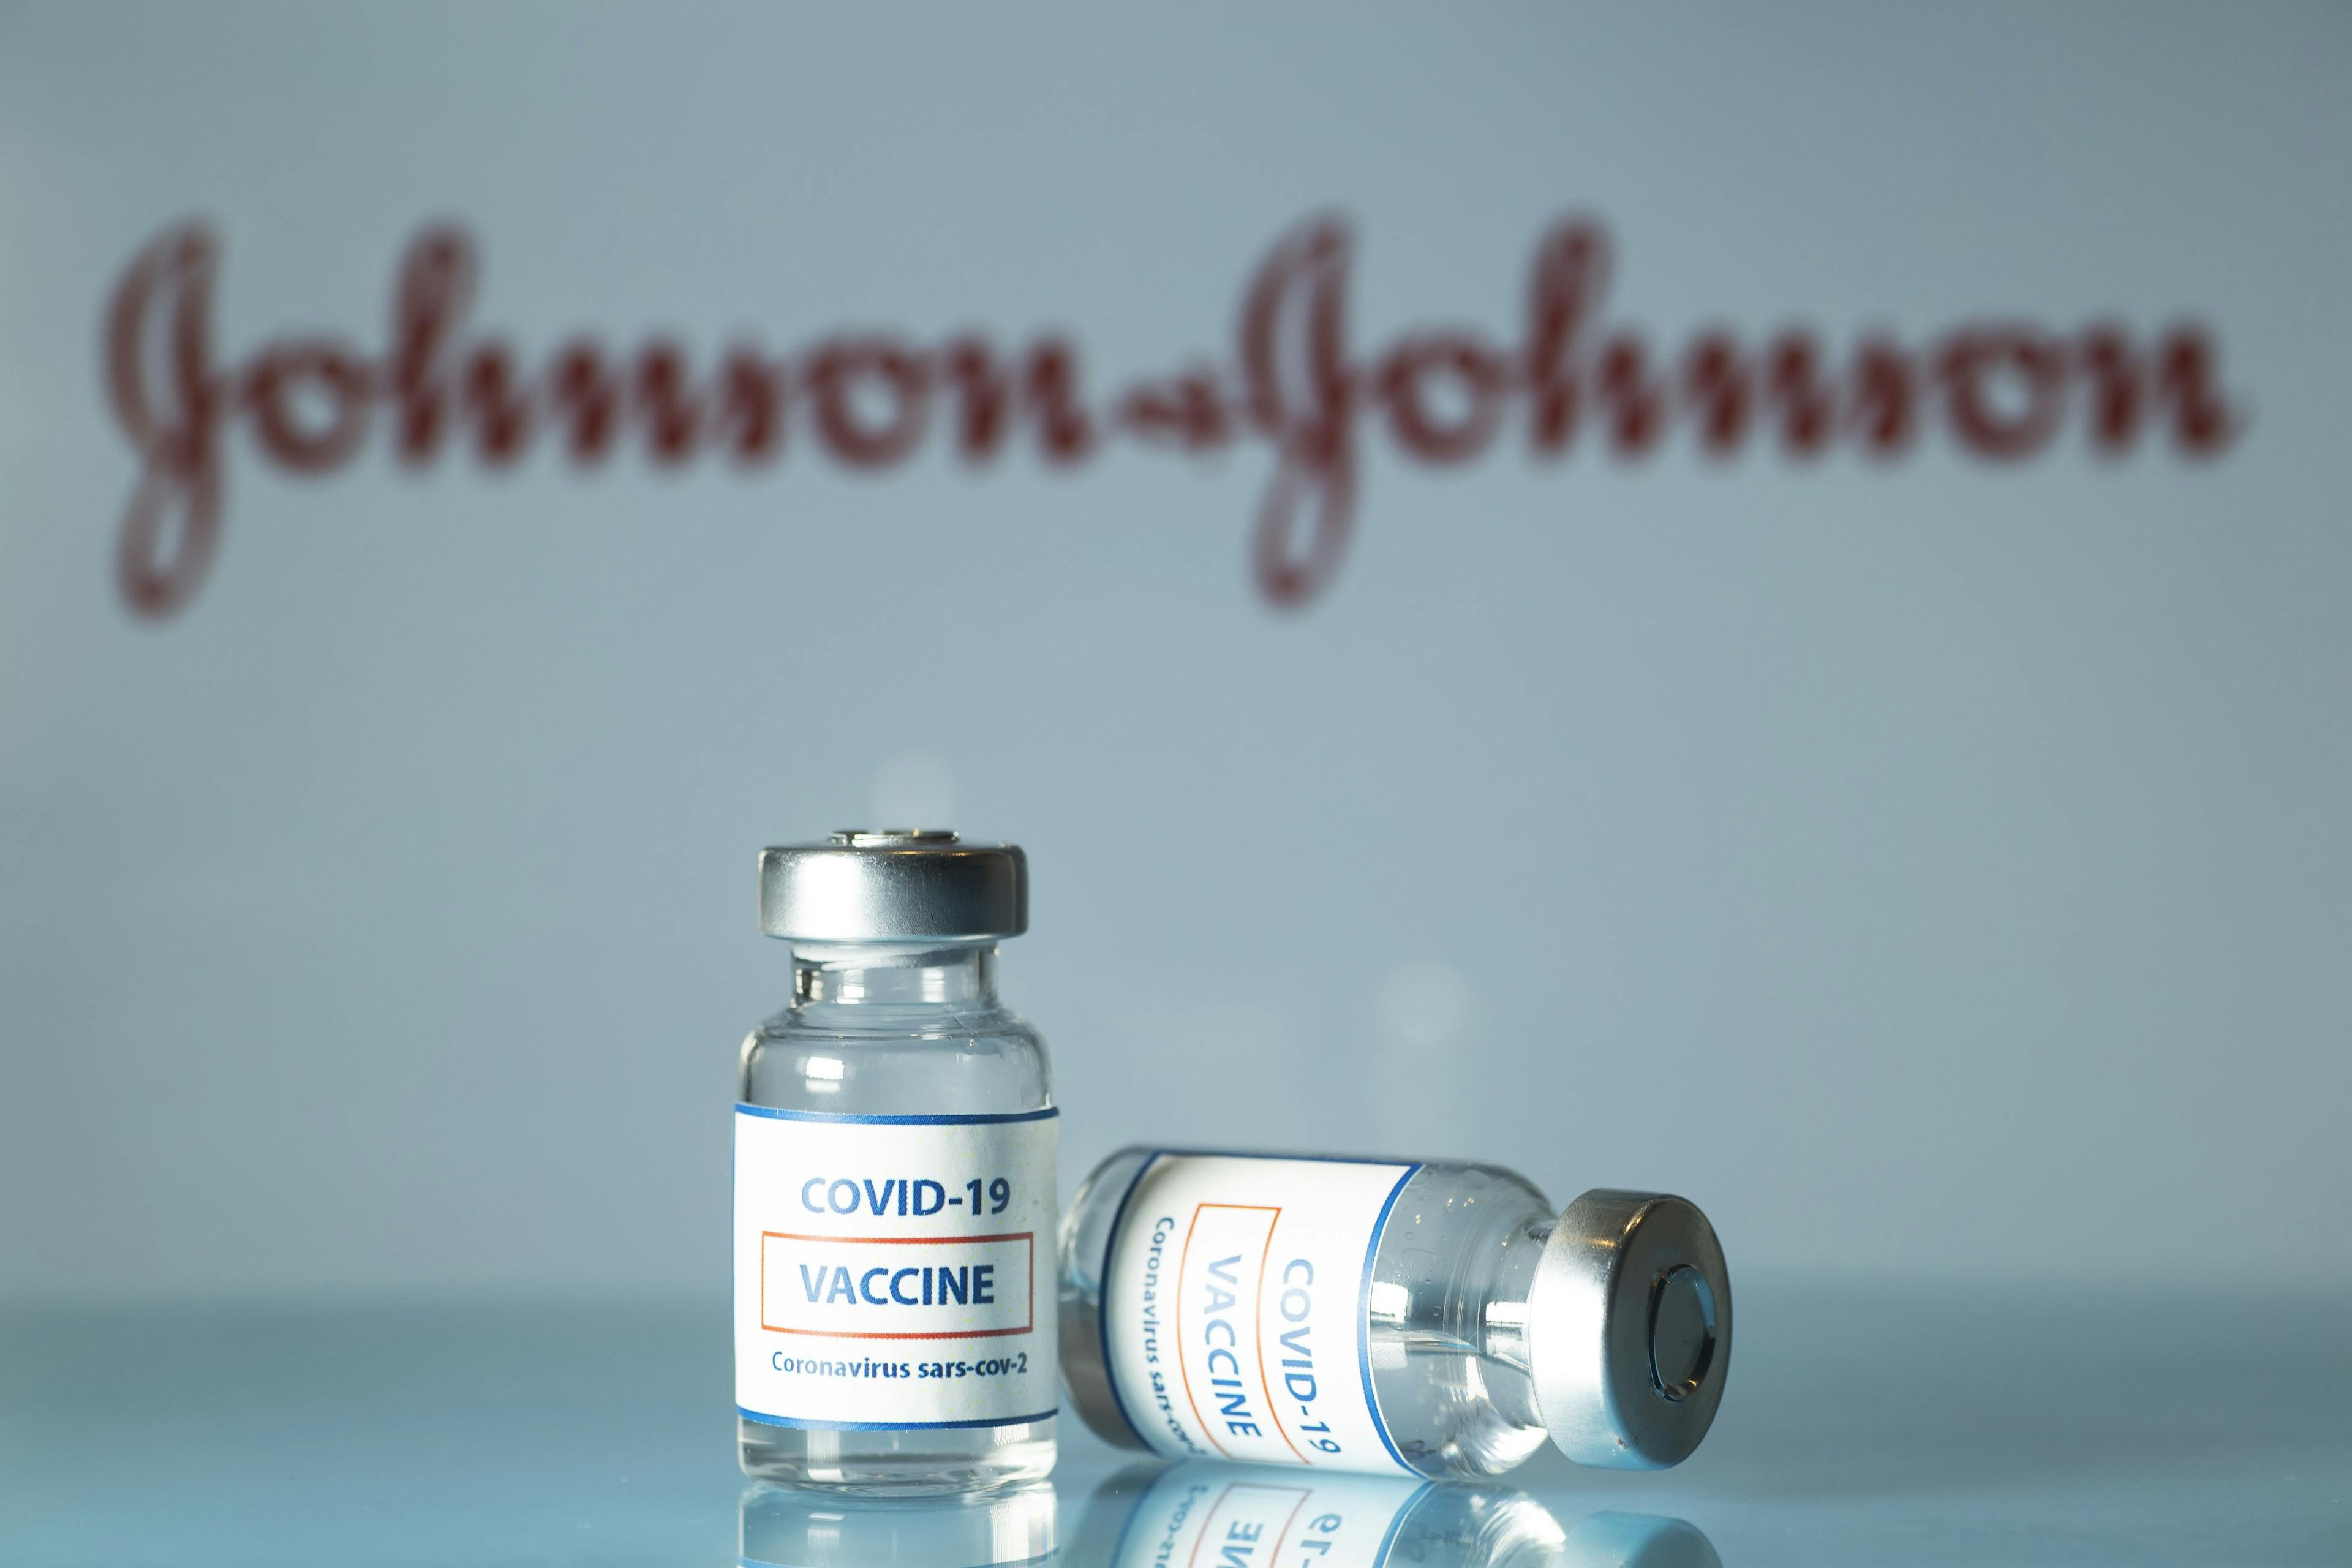 FDA: Johnson & Johnson COVID-19 Vaccine is Safe and Effective